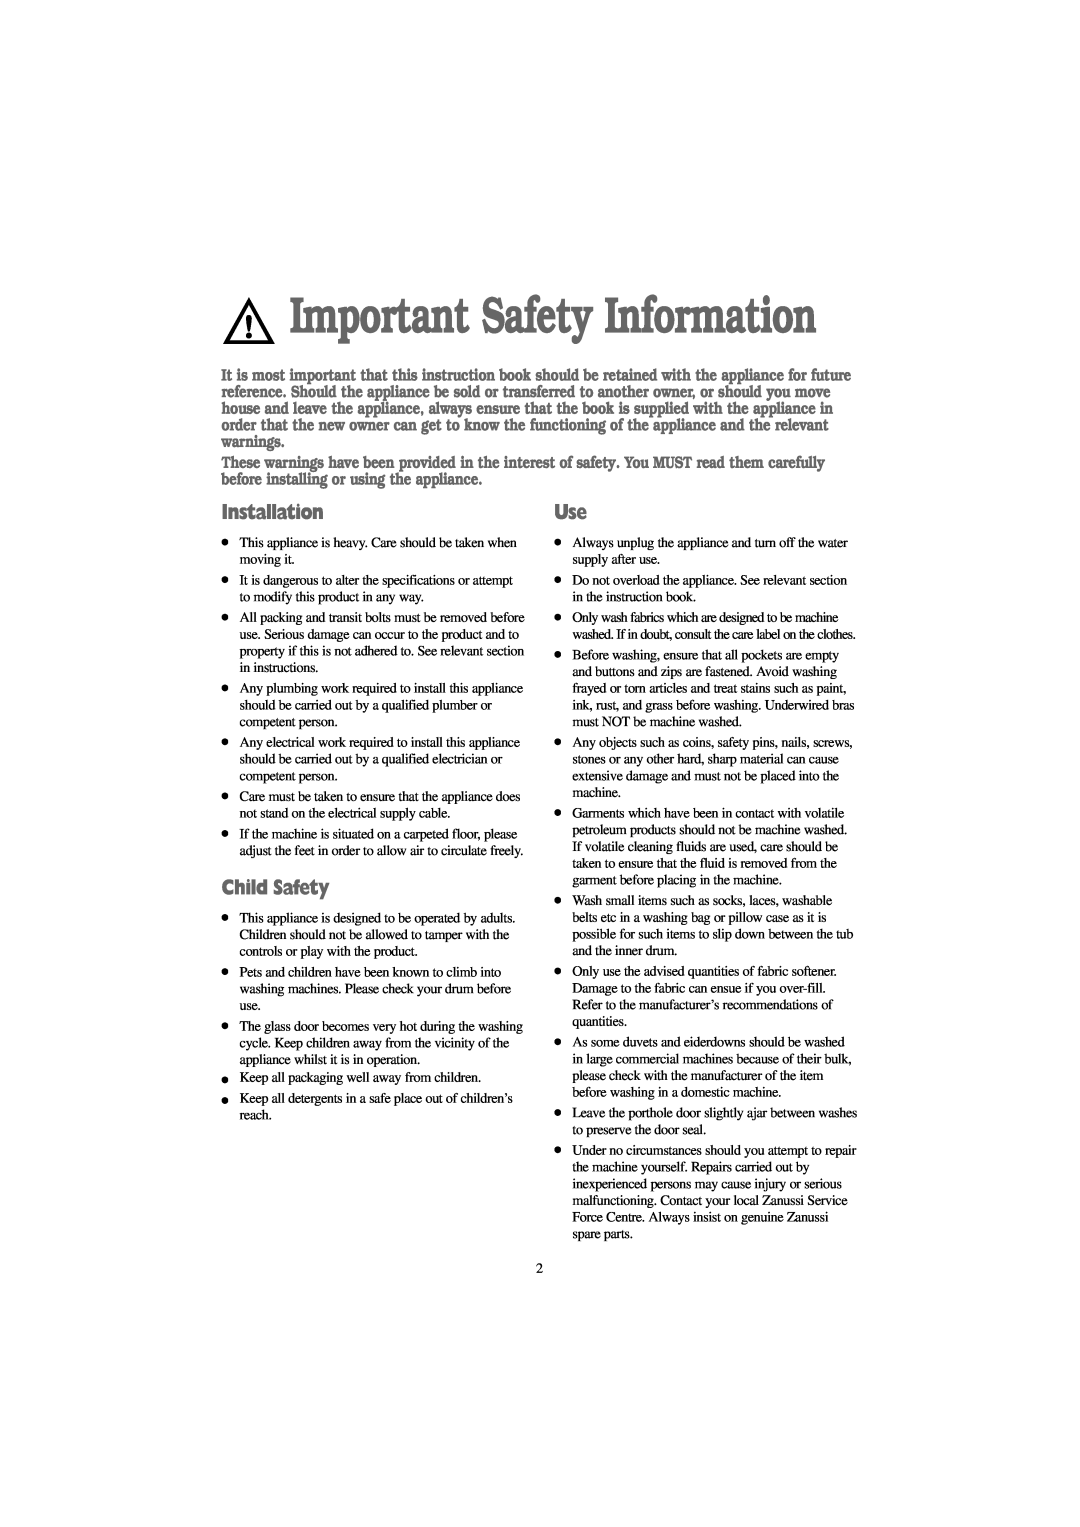 Electrolux FJD 1466 S, FJD 1666 W, FJD 1266 W, FJD 1466 W manual Installation, Child Safety, Important Safety Information 